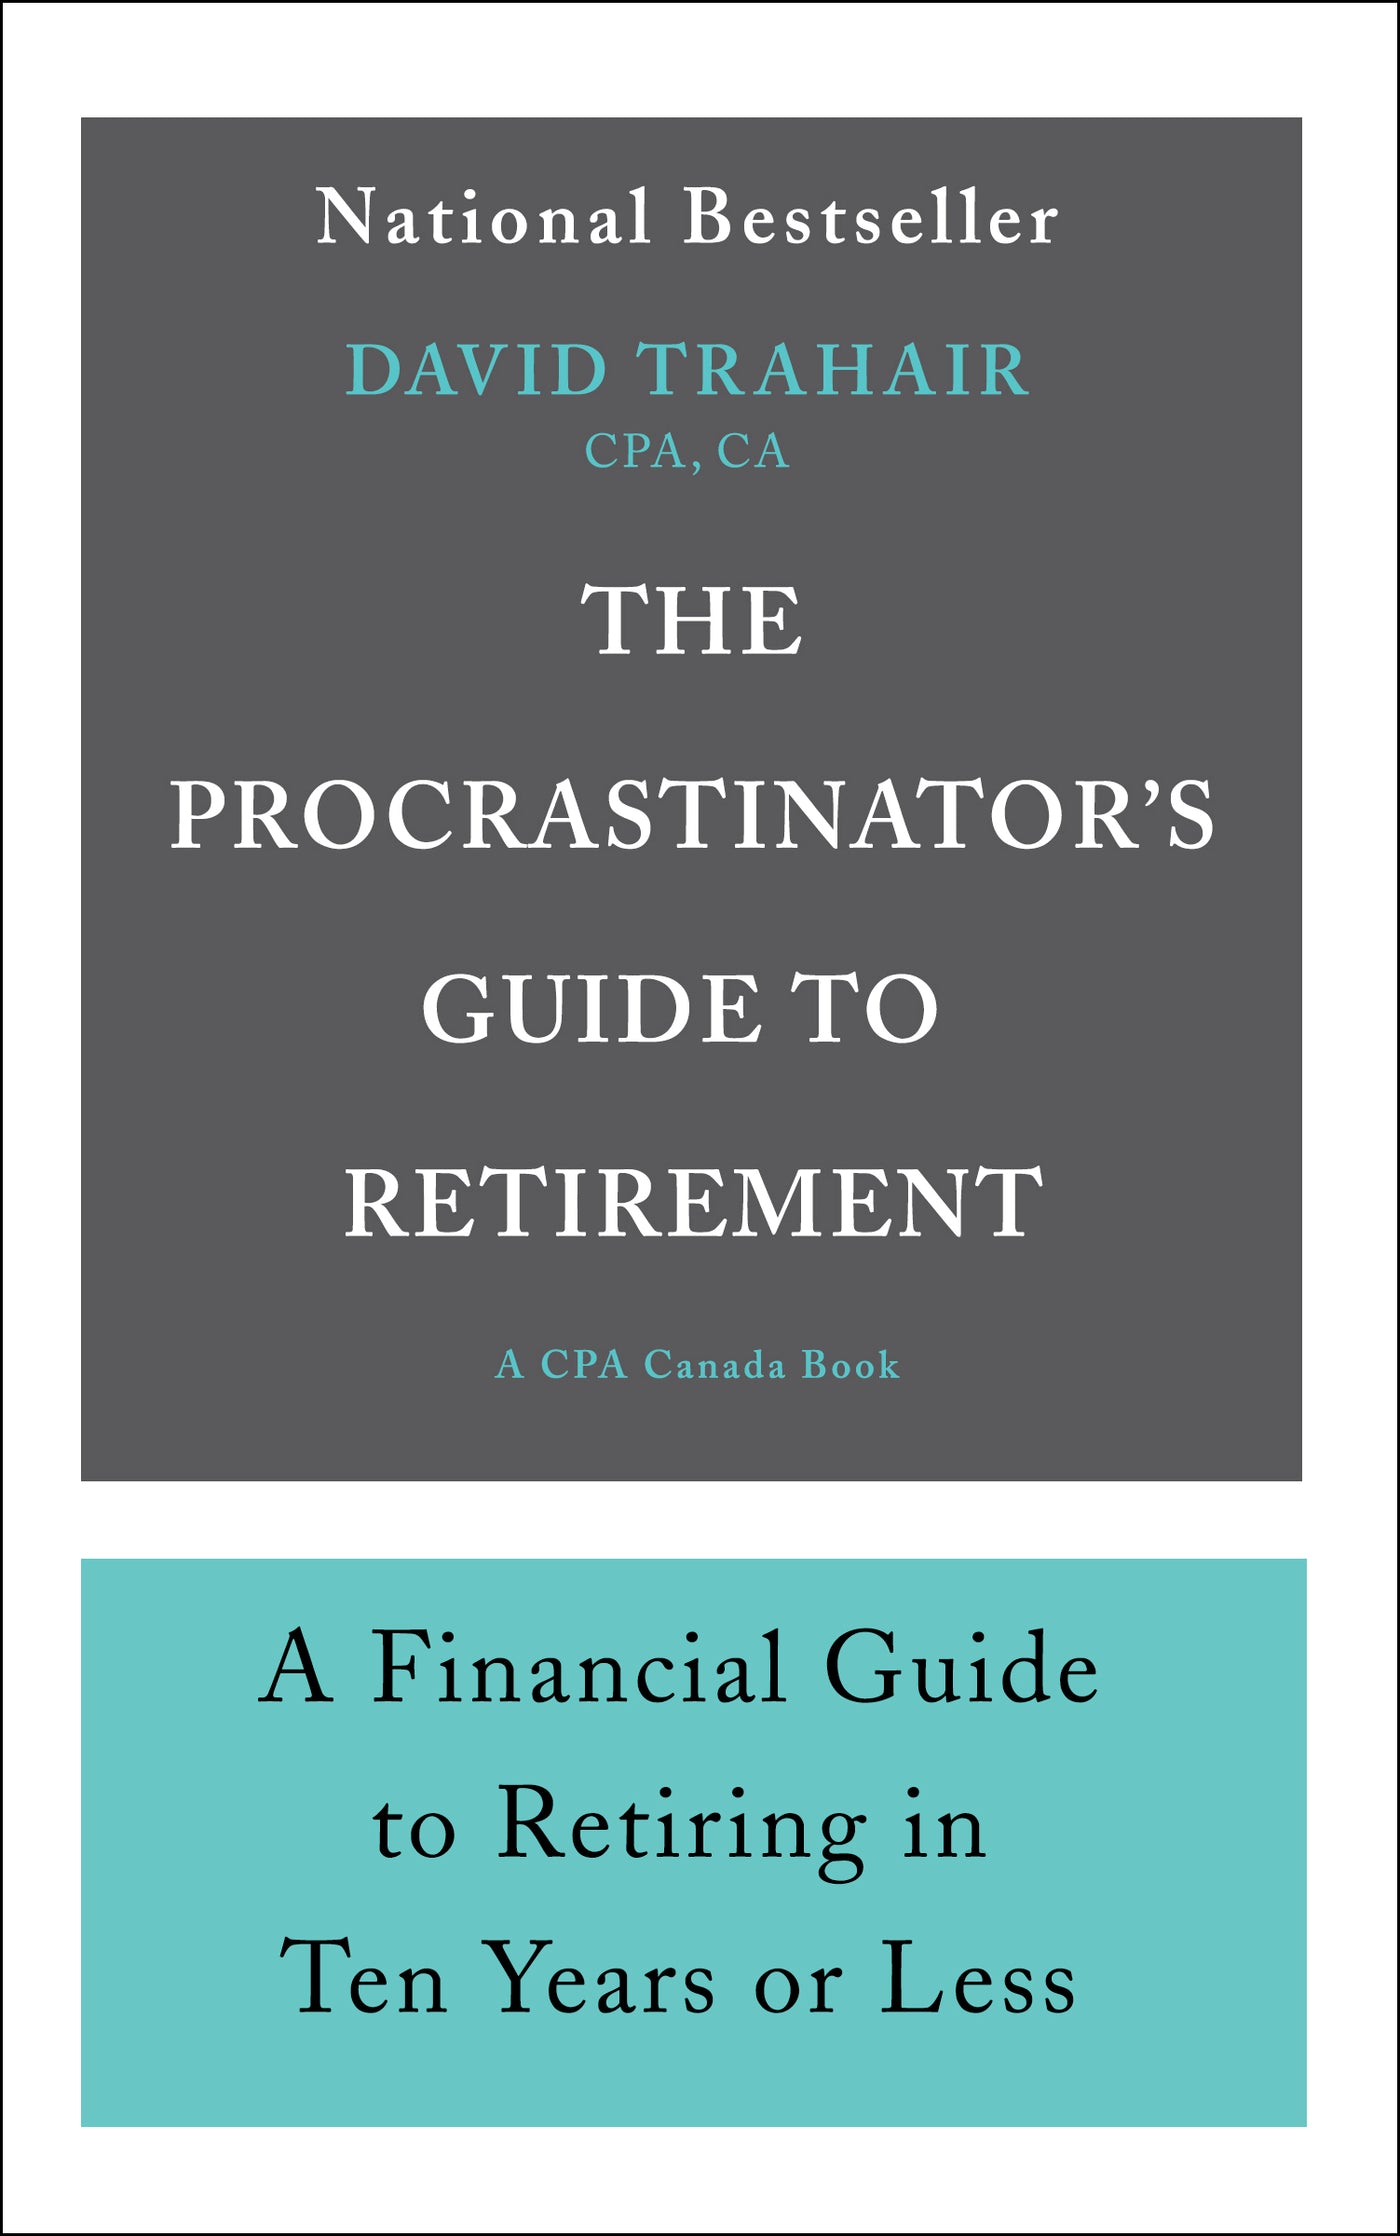 The Procrastinator's Guide to Retirement